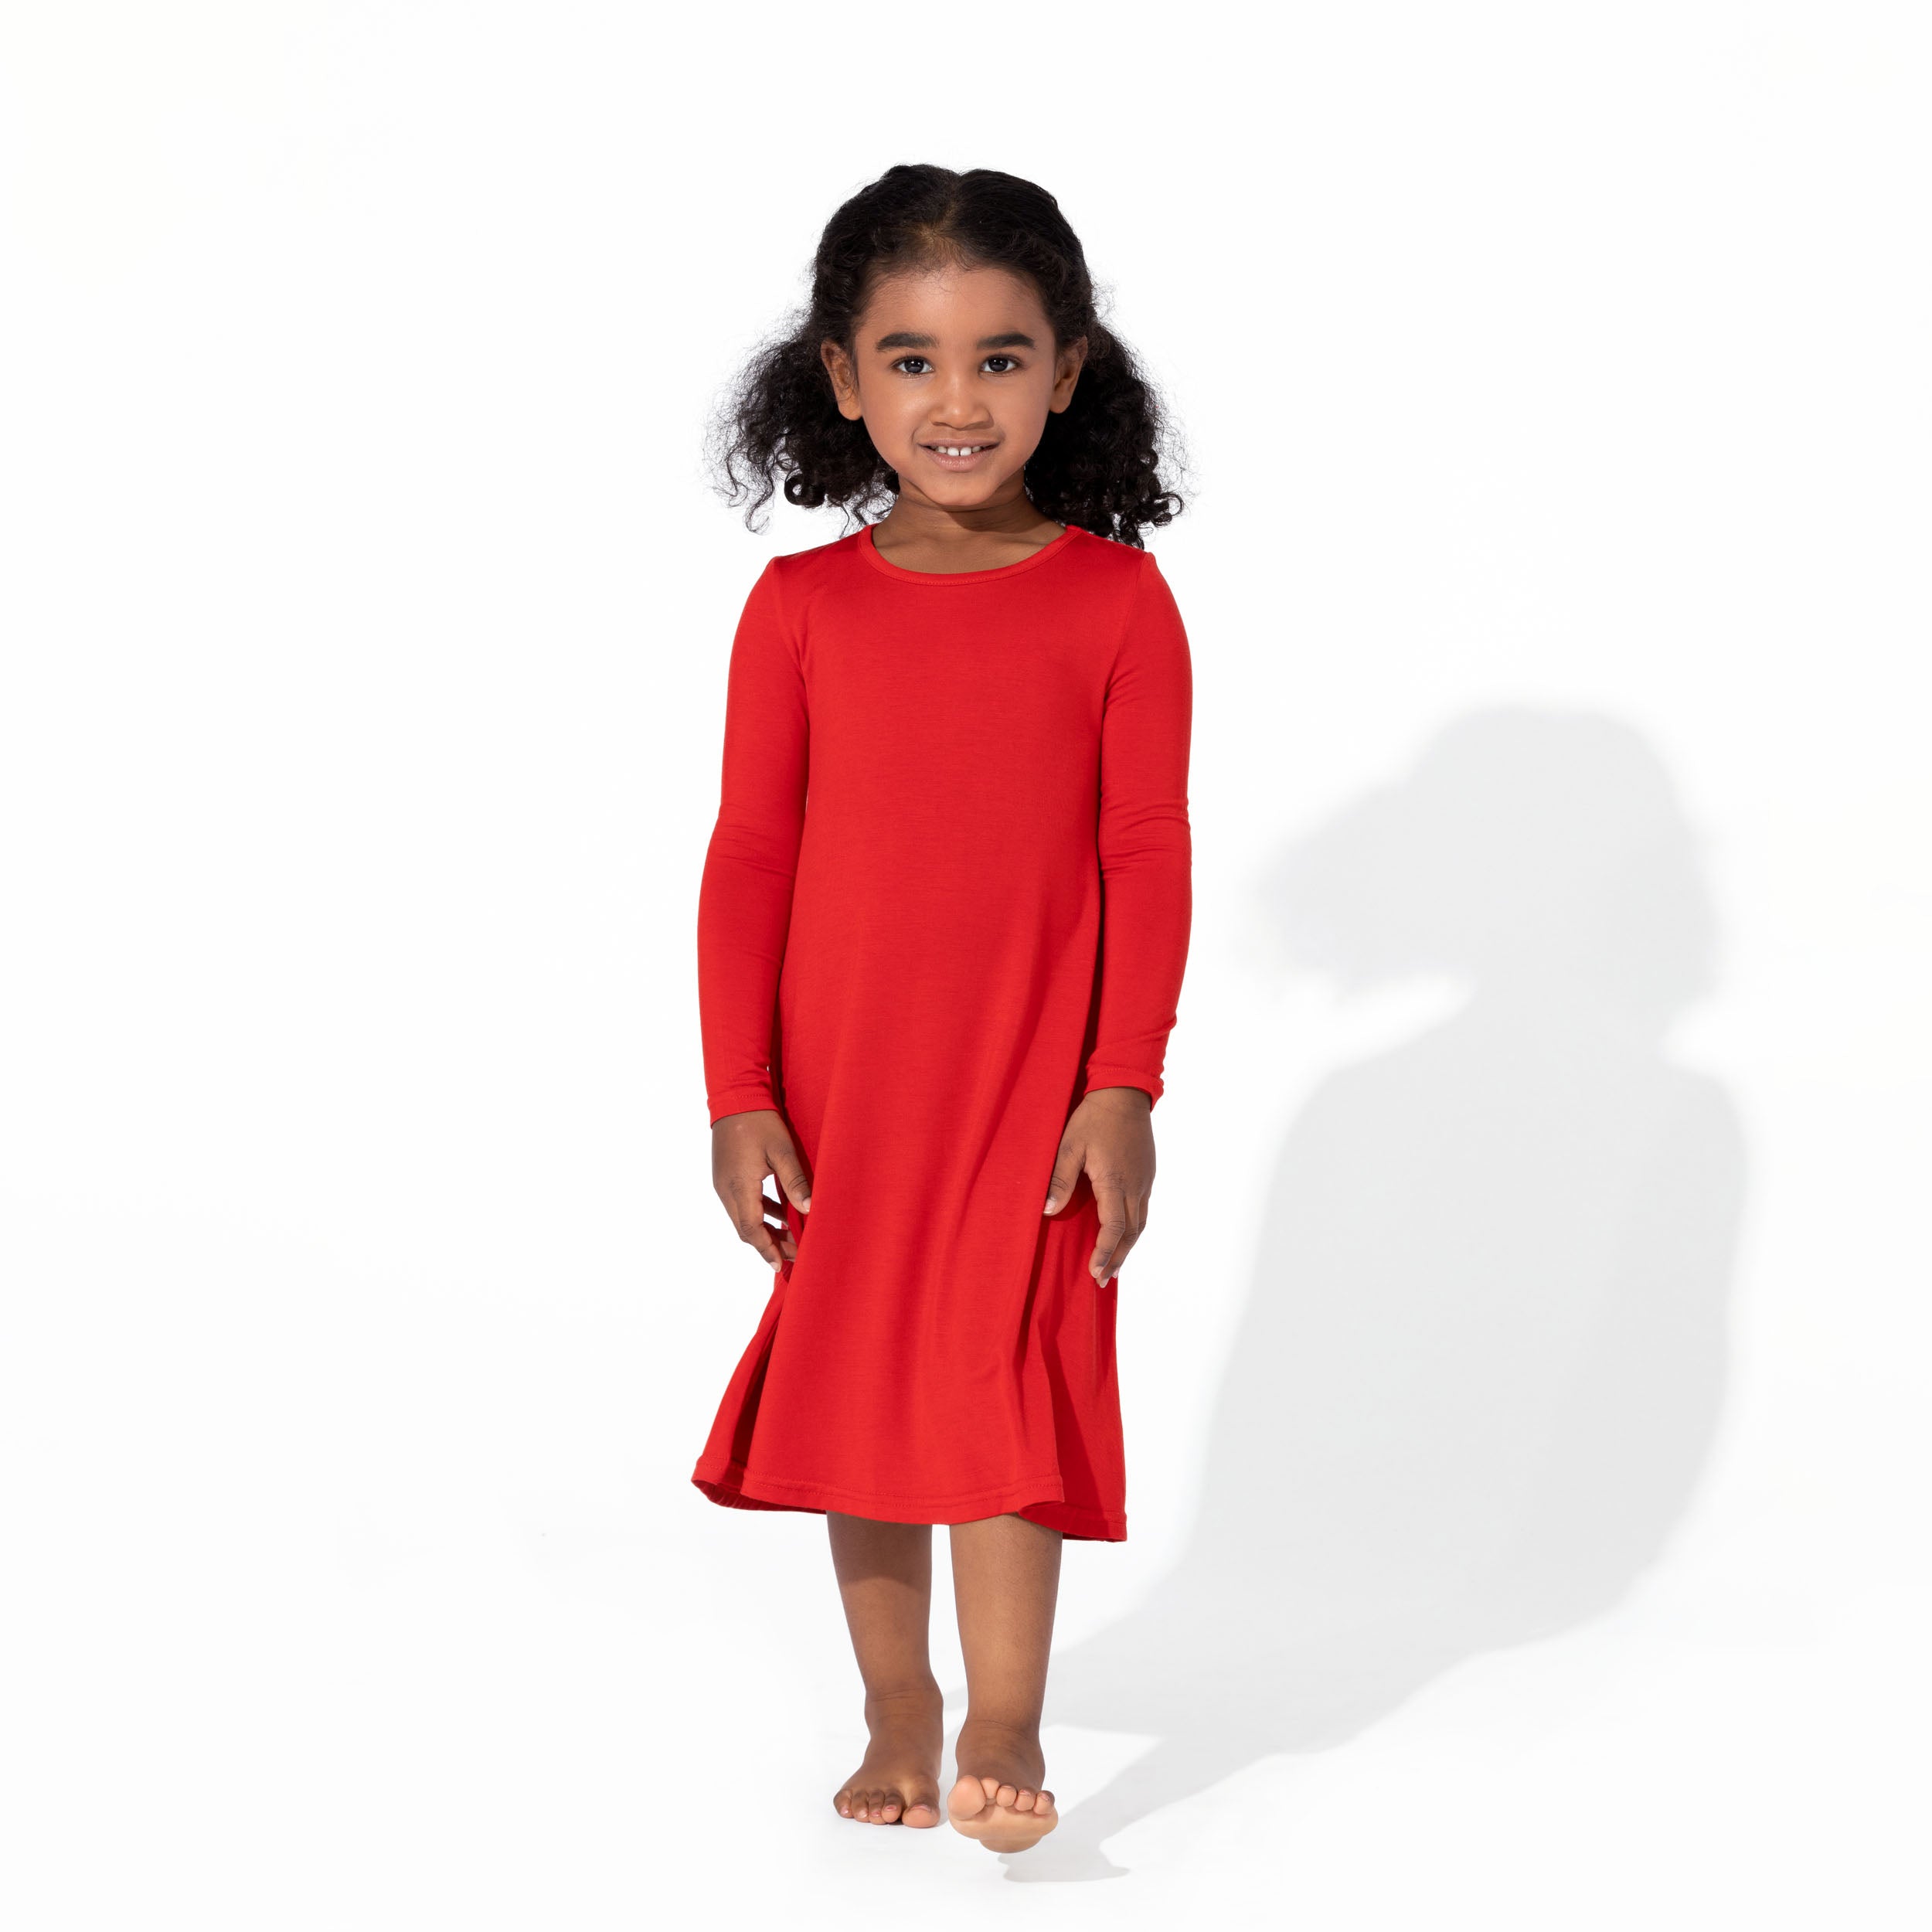 Winterberry Red Bamboo Girls' Dress, Eczema Safe Pajama